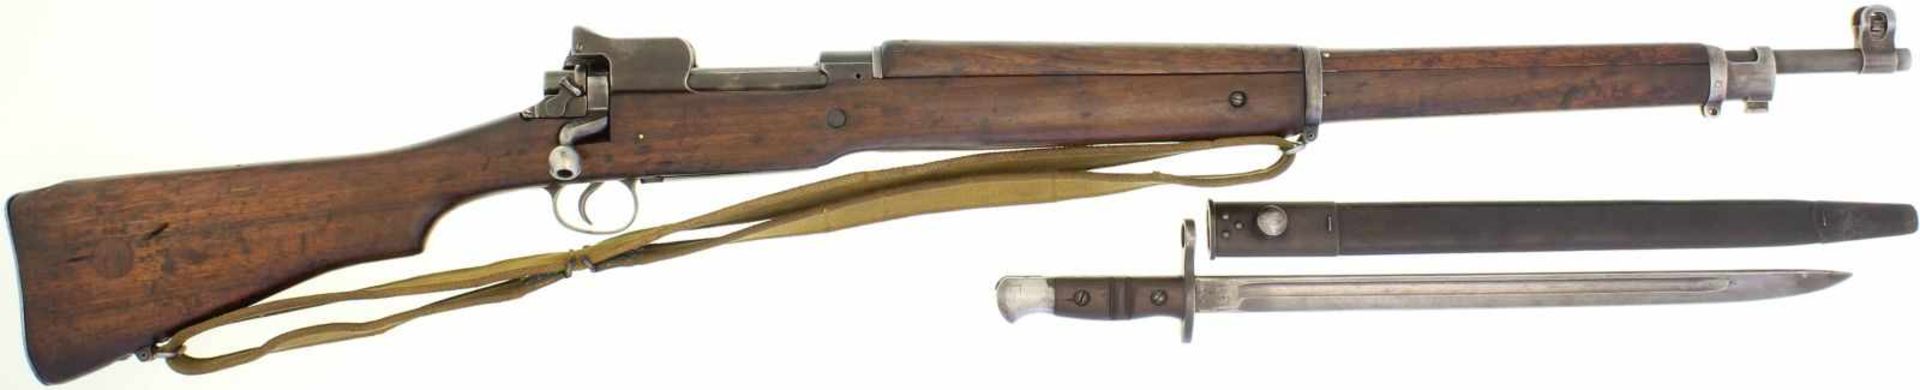 Repetierbüchse, P14, Remington 1907, Kal. .303brit@ LL 660mm, TL 1175mm, Zylinderverschluss,